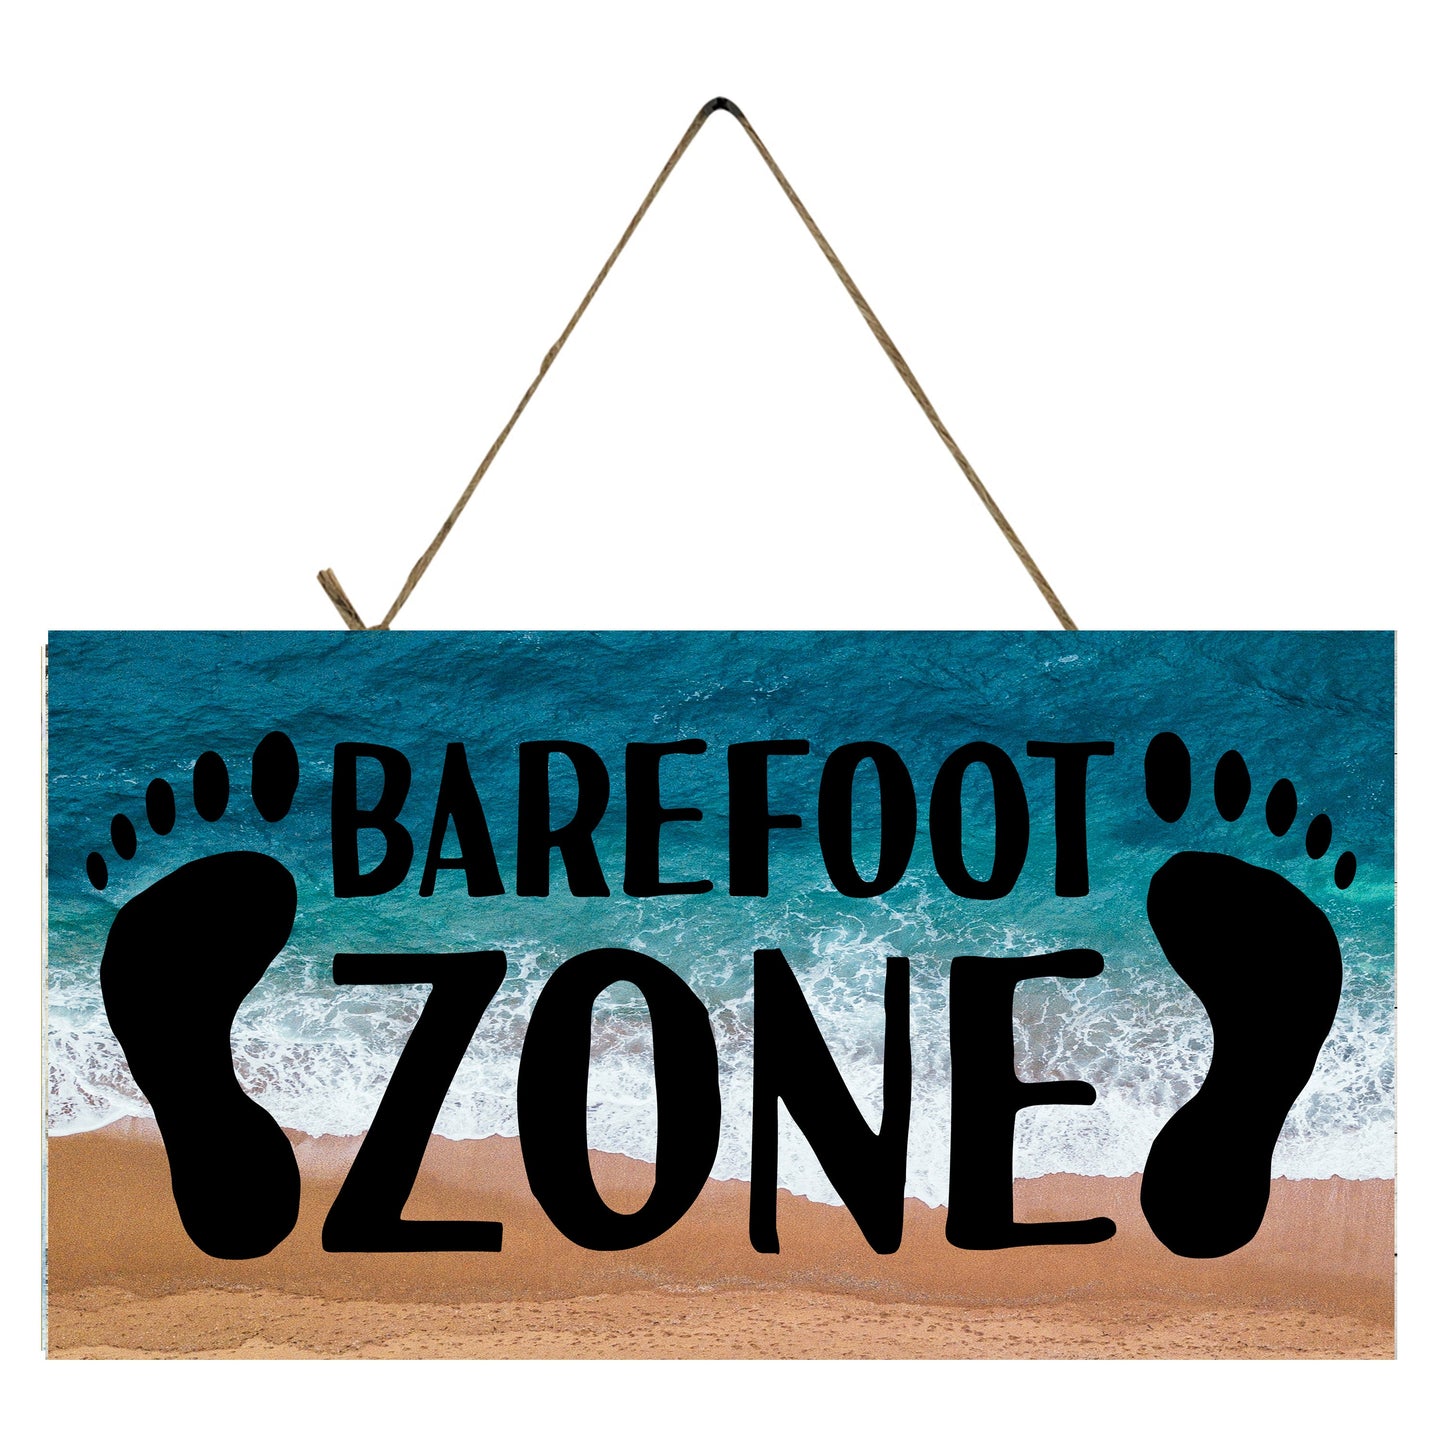 Barefoot Zone Printed Handmade Wood Sign